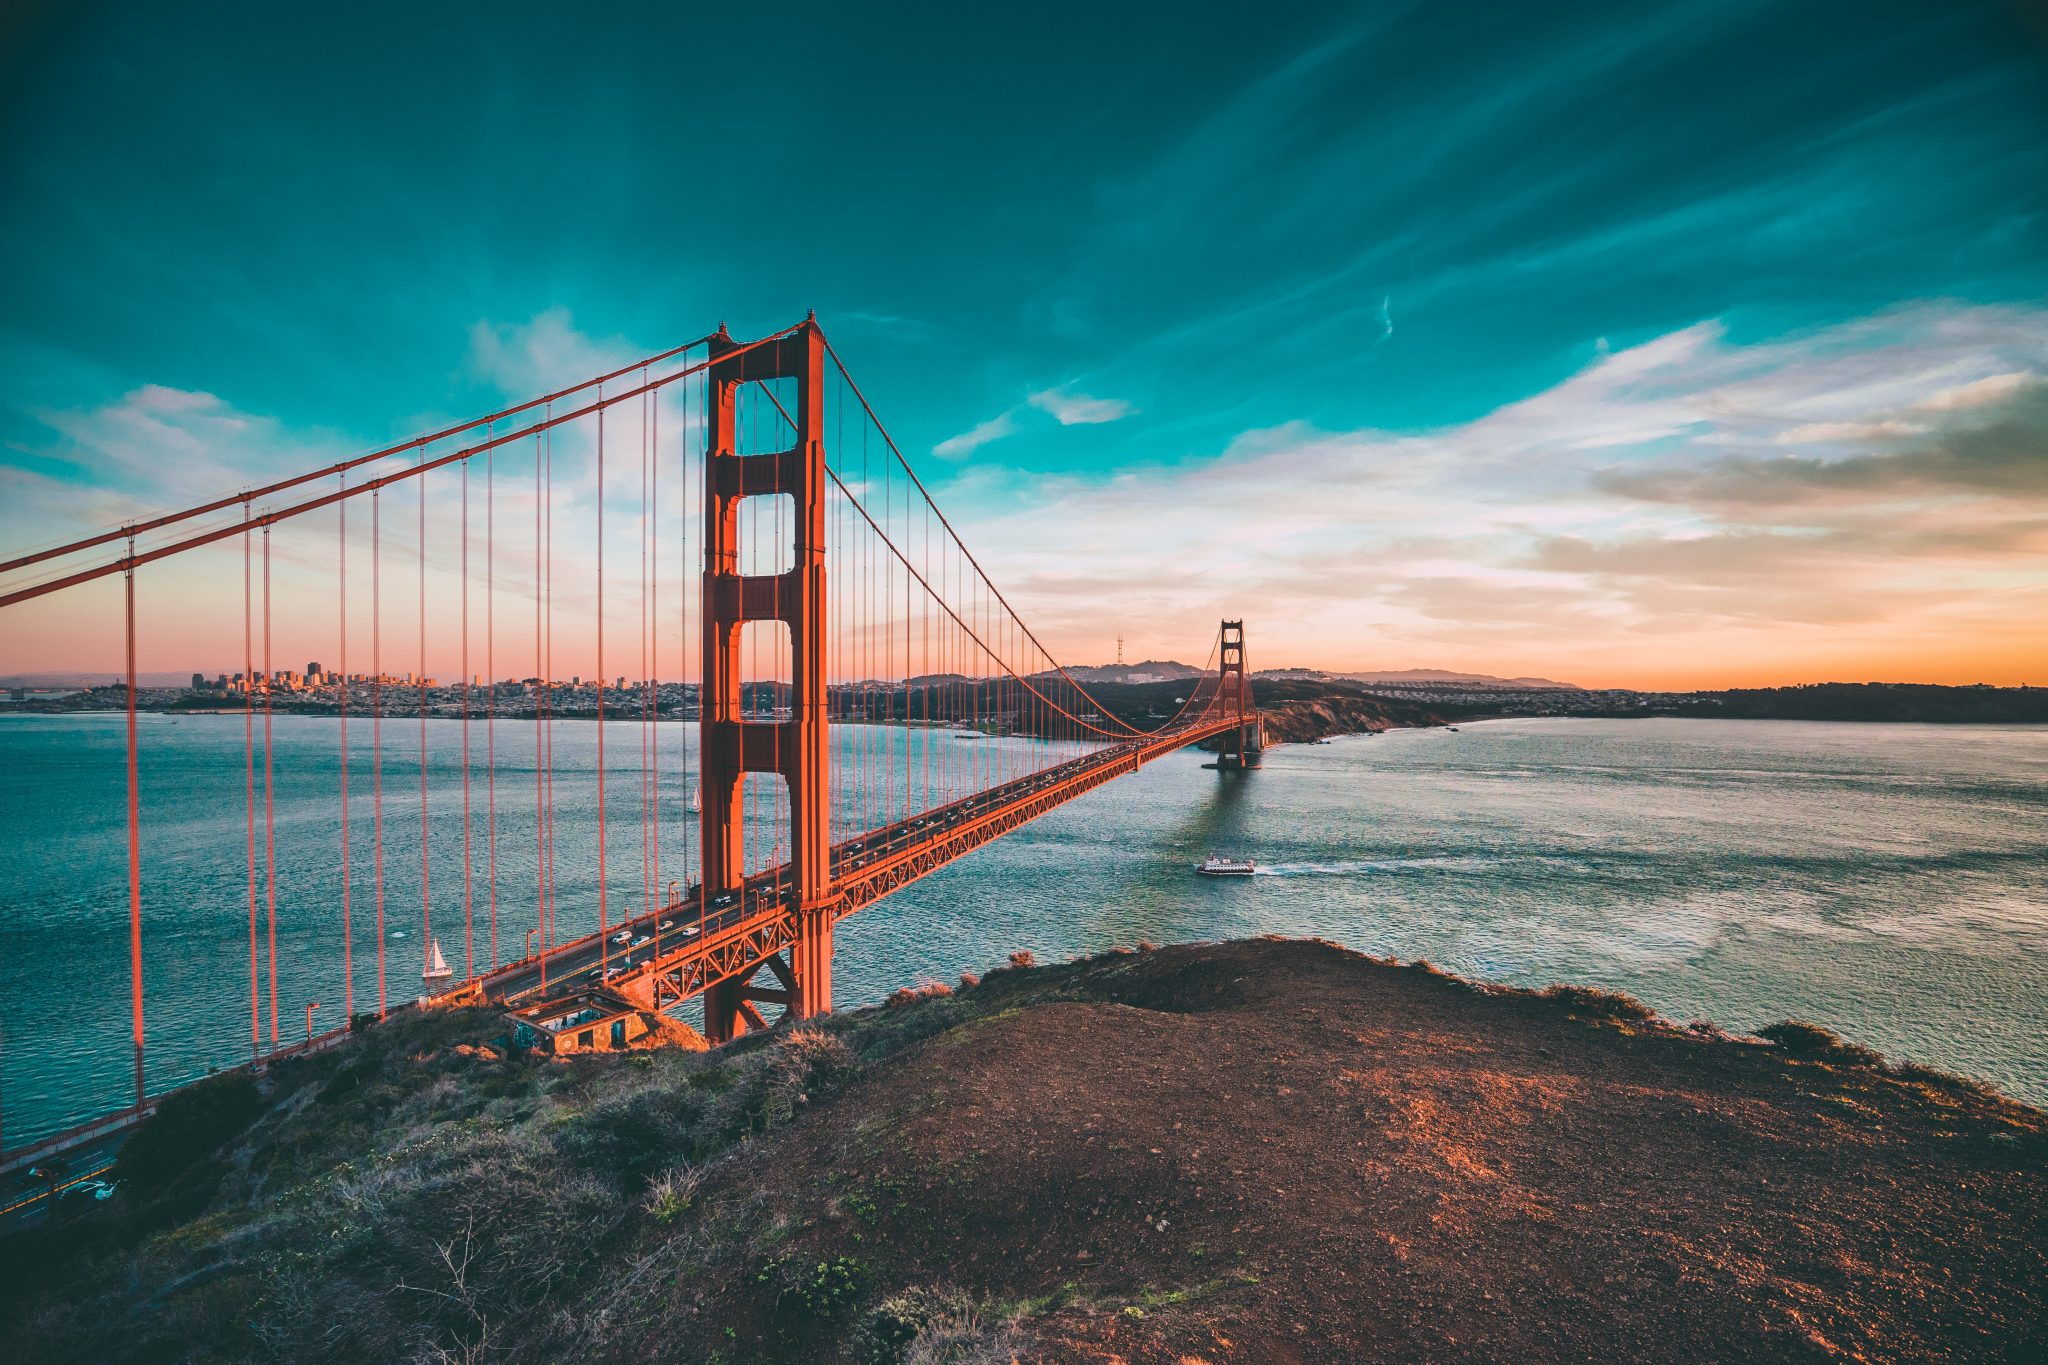 Sunset view of Golden Gate Bridge in San Francisco